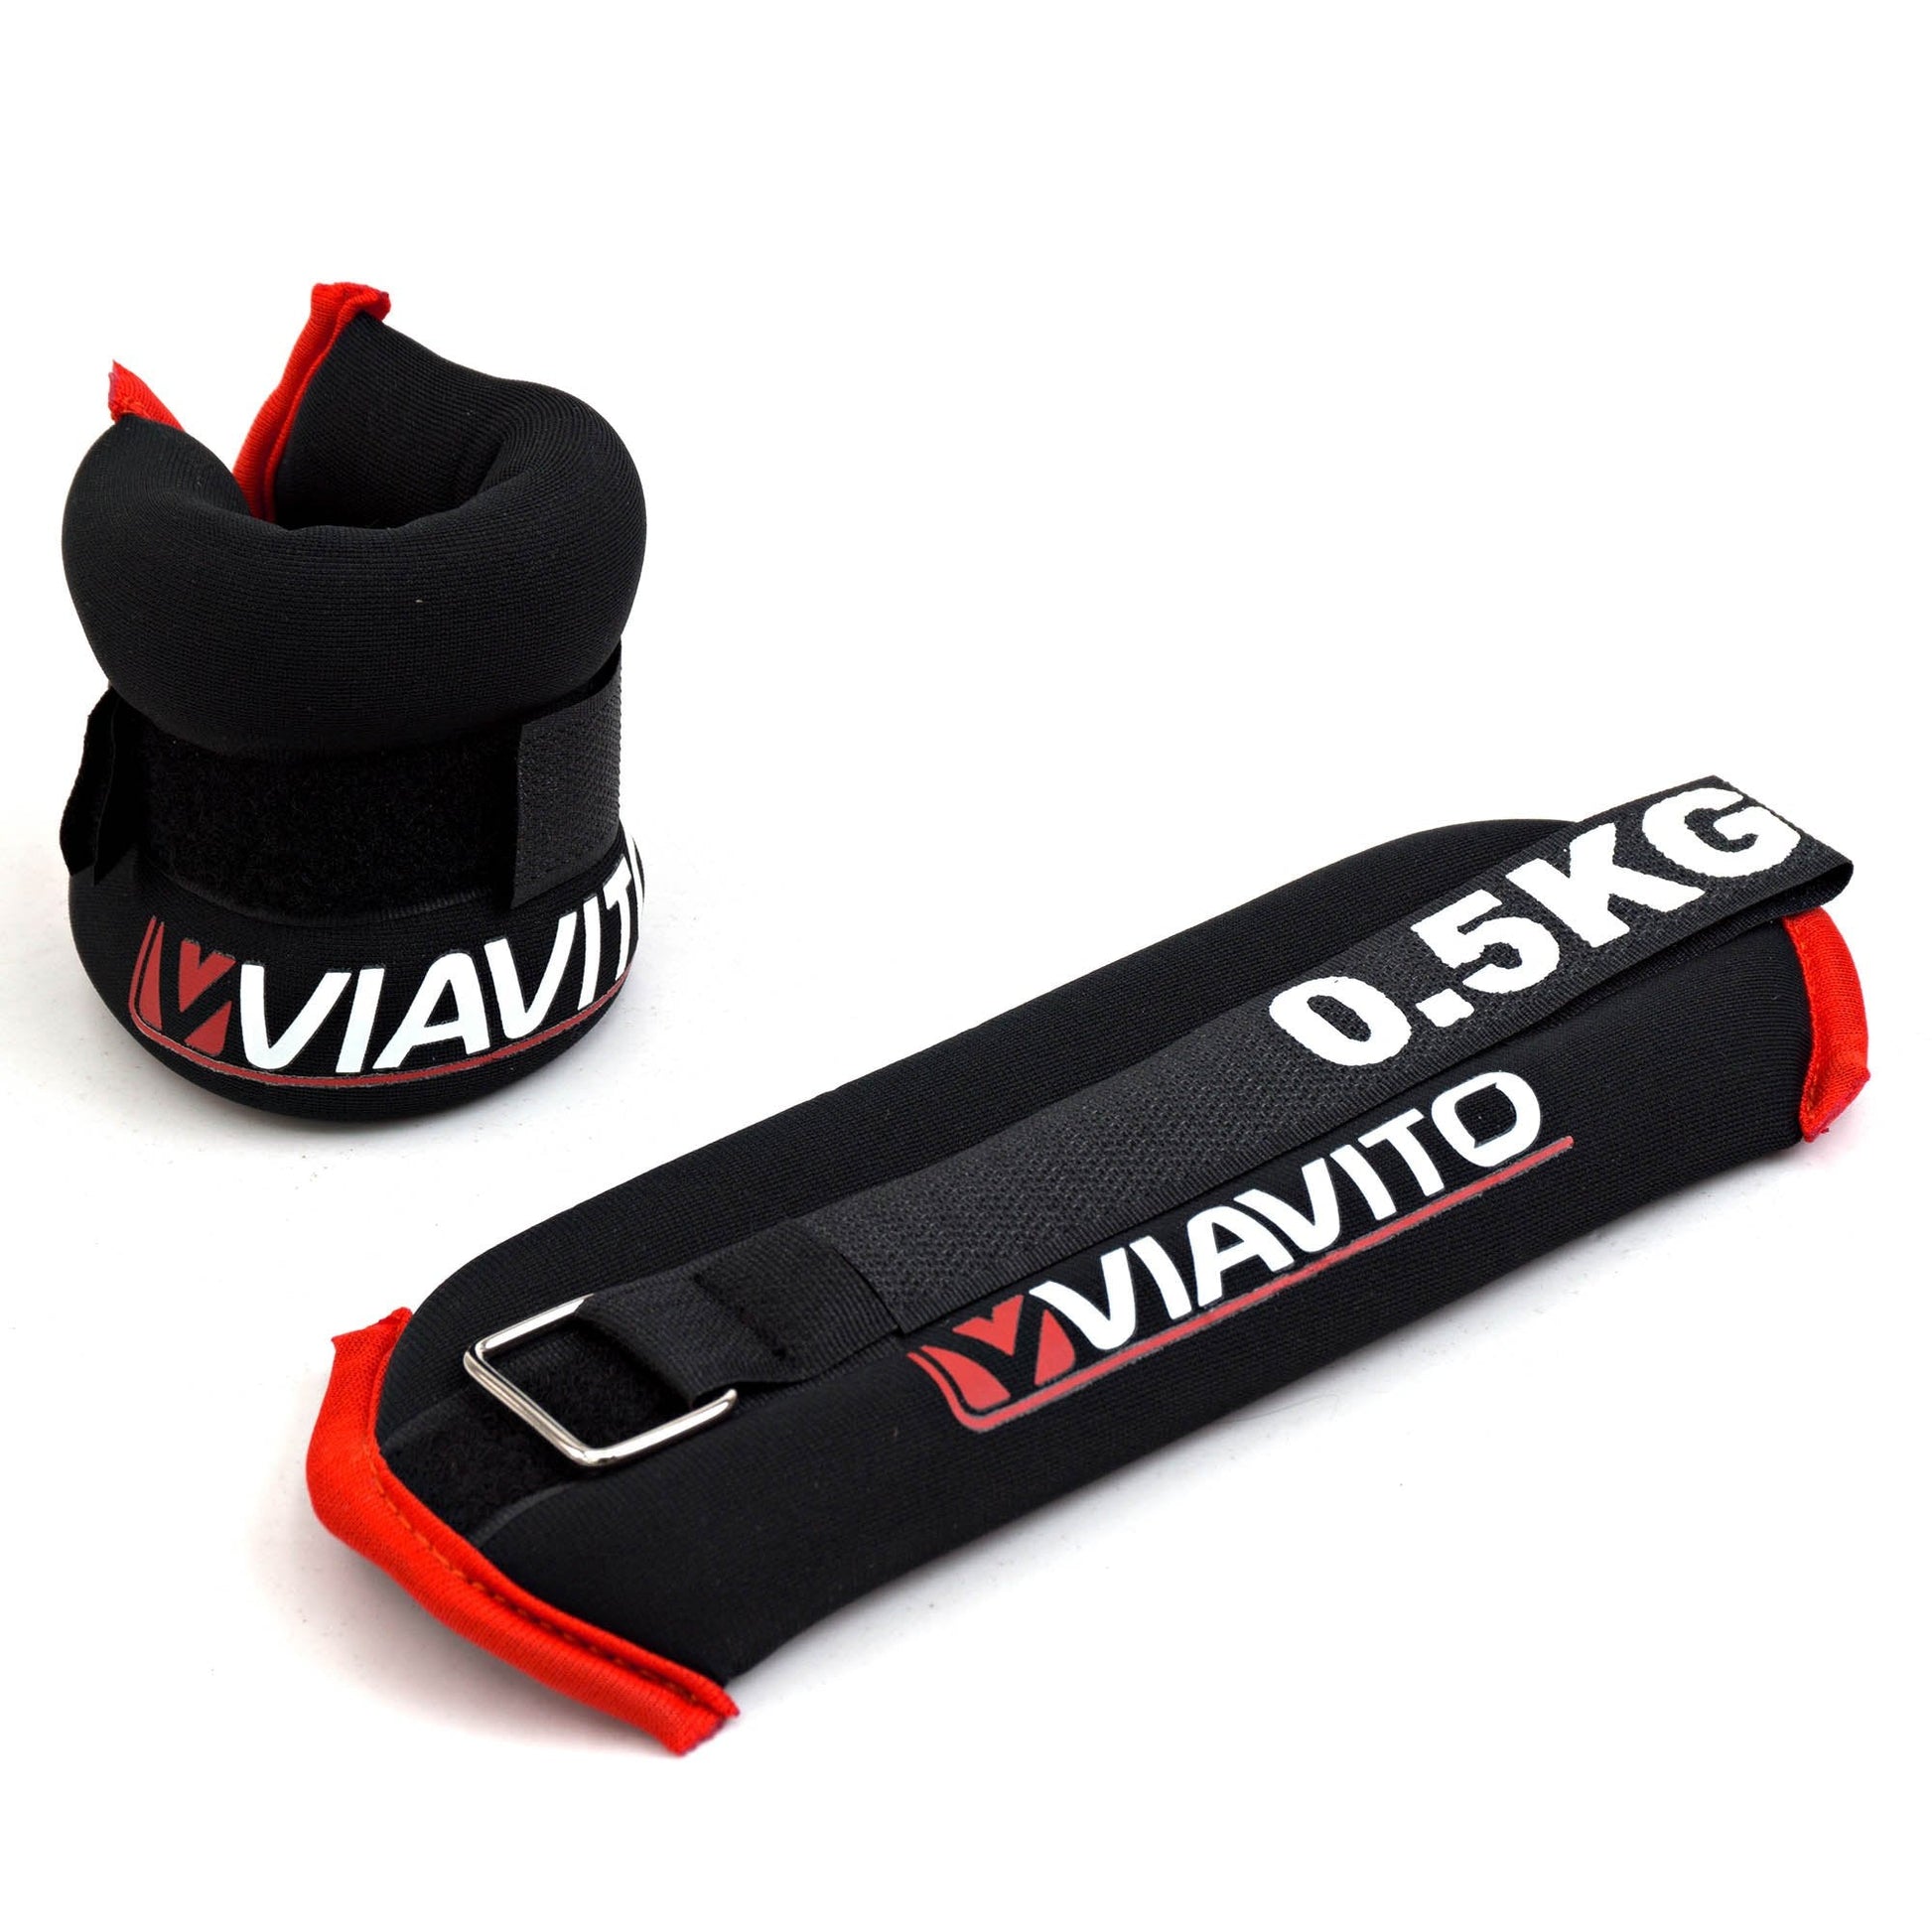 |Viavito 2 x 0.5kg Wrist Weights - 1|